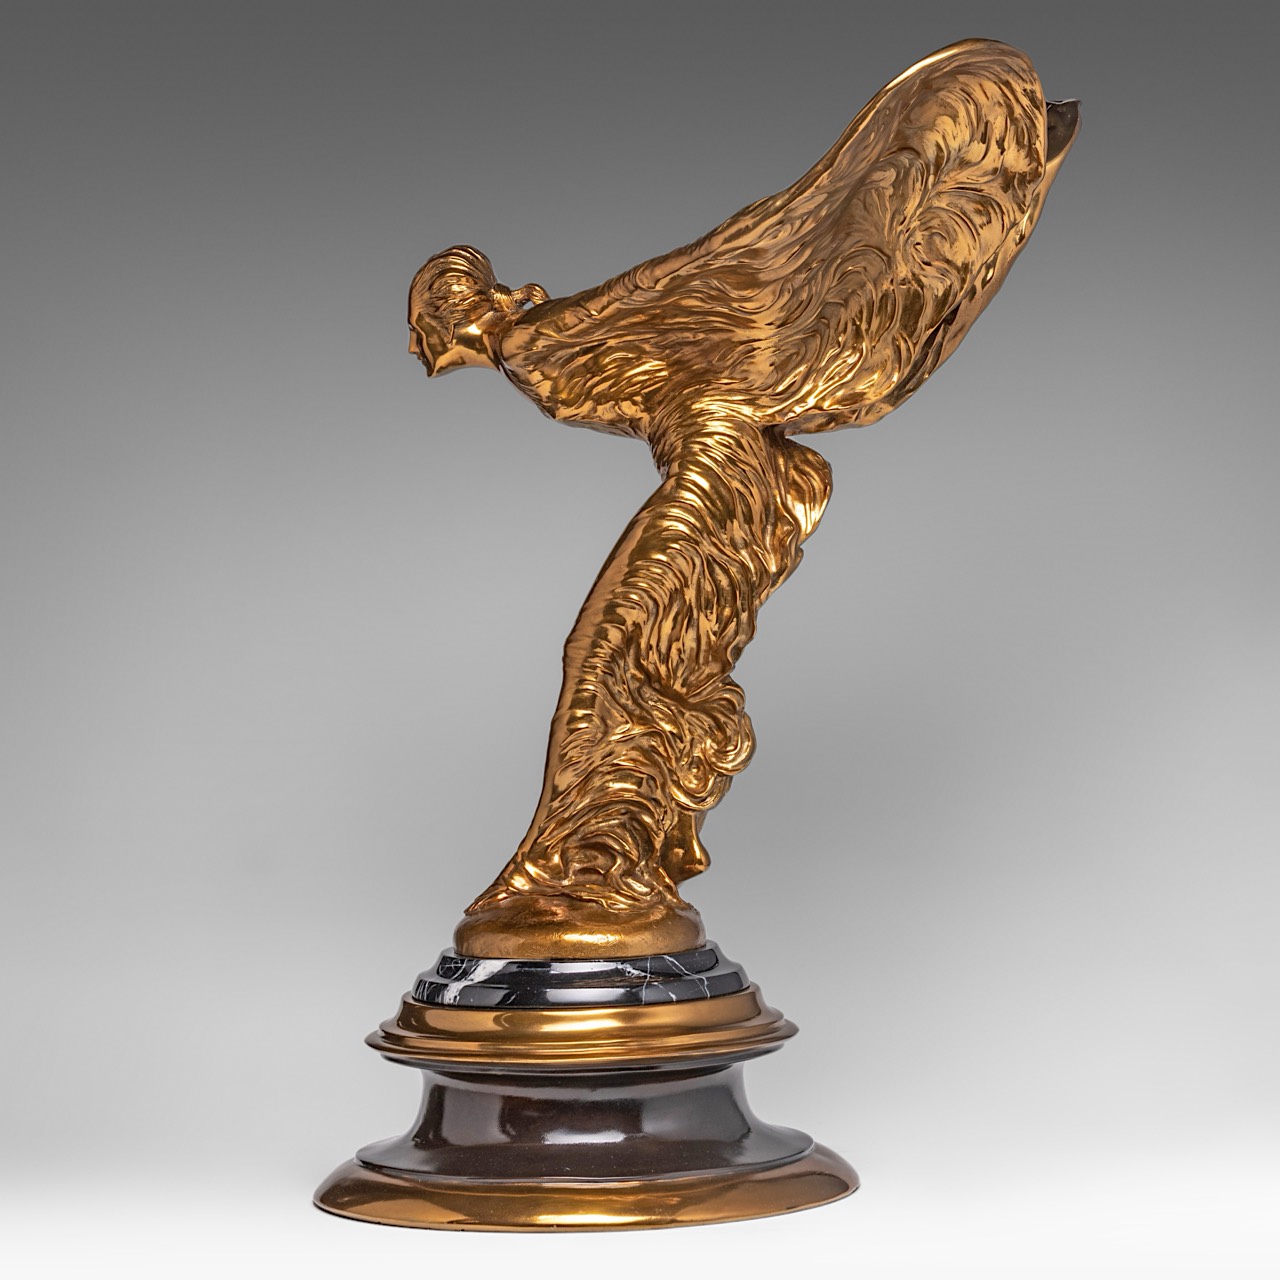 Charles Sykes (1875-1950), gilt bronze sculpture of the 'Spirit of Ecstasy', Rolls-Royce, H 69 cm - Image 5 of 14